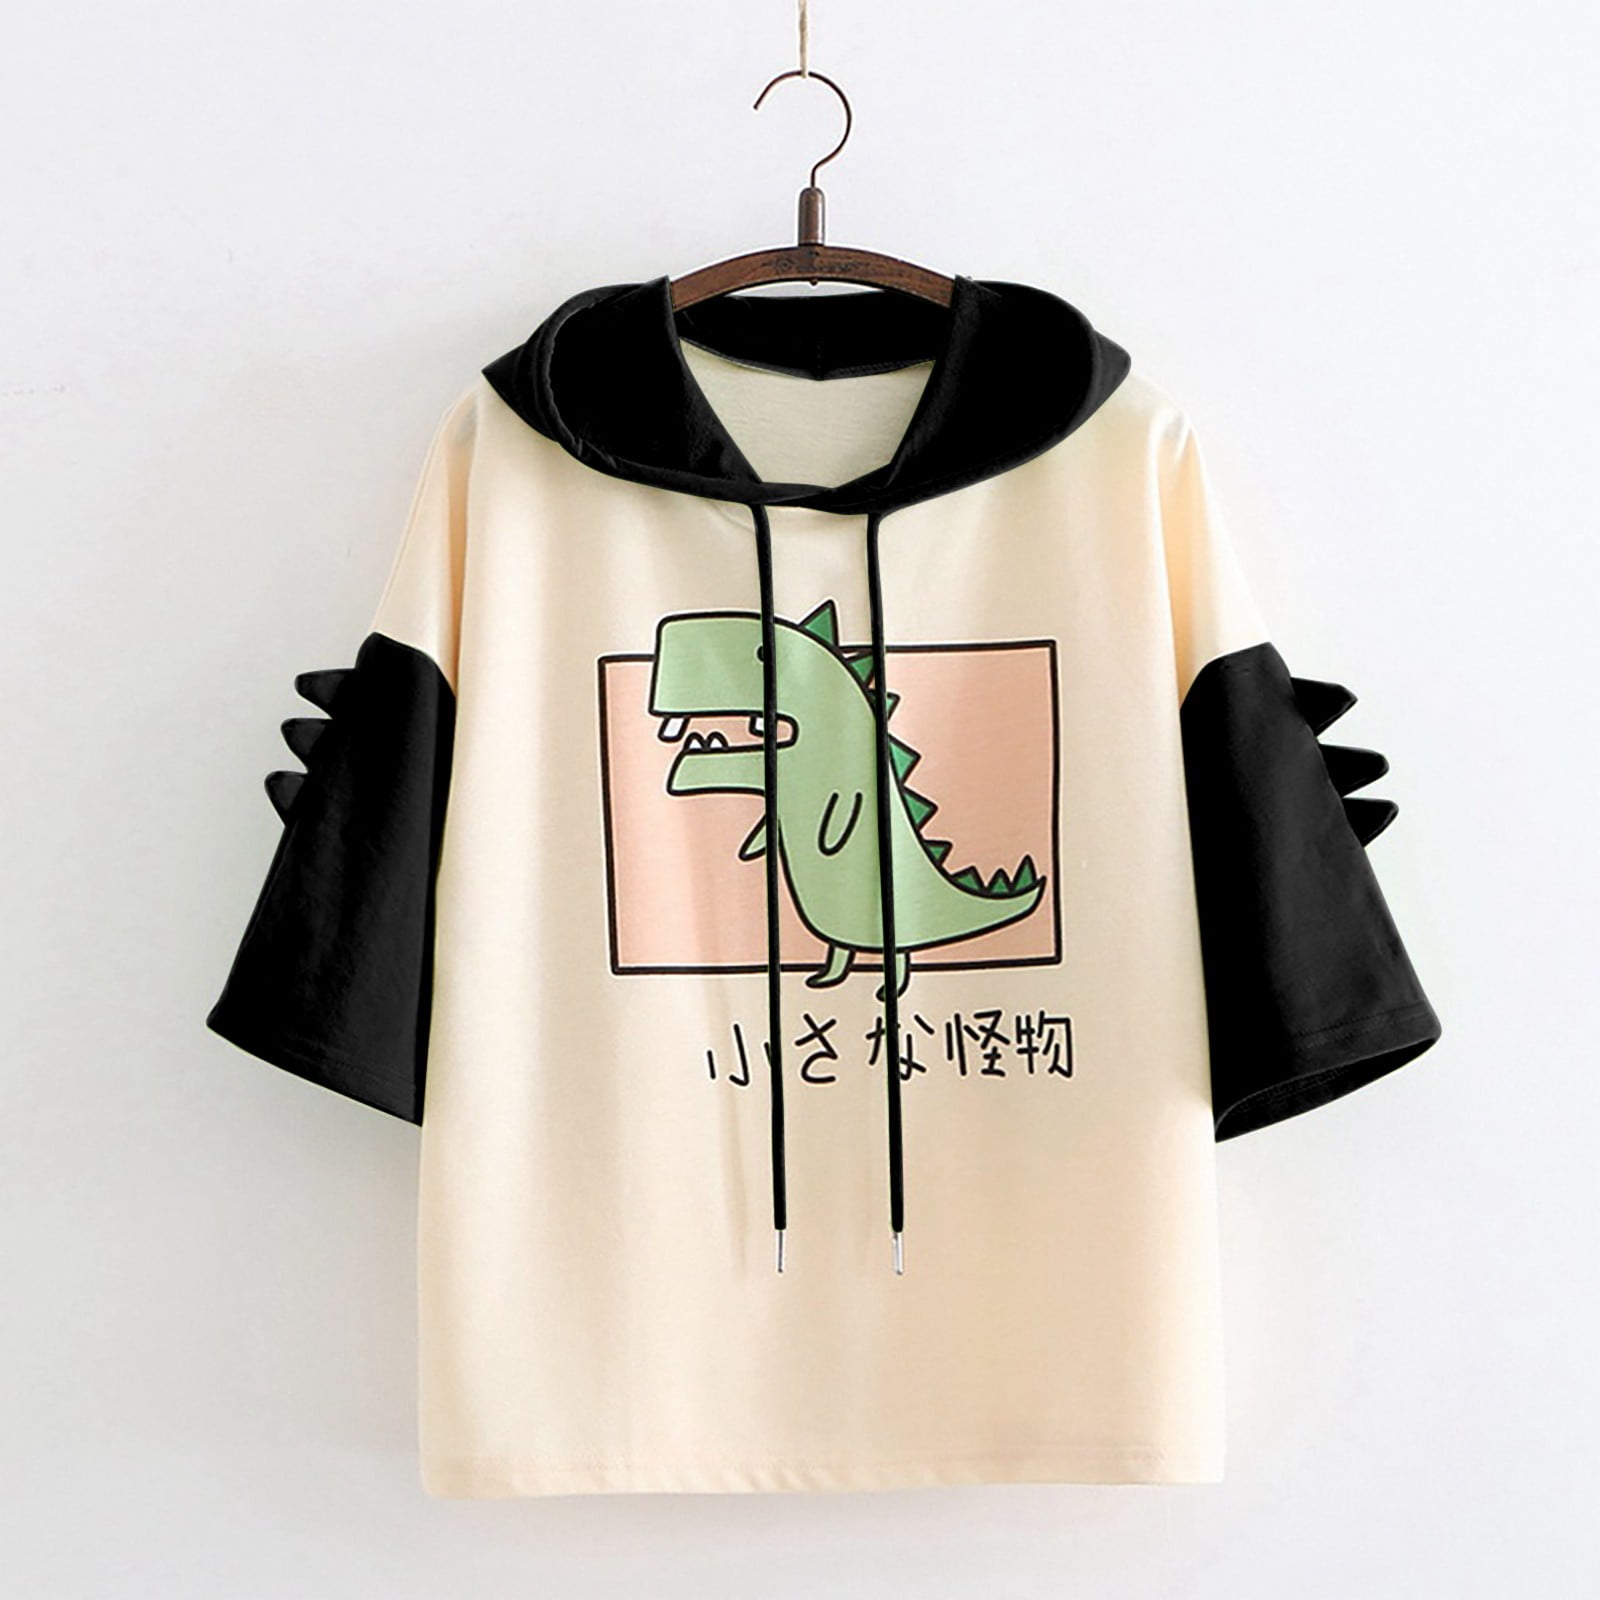 T Shirts for Teen Girls,Womens Cute Emo Dinosaur Shirt Loose Drawstring Hoodie Short Sleeve Tops Casual Graphic Tees